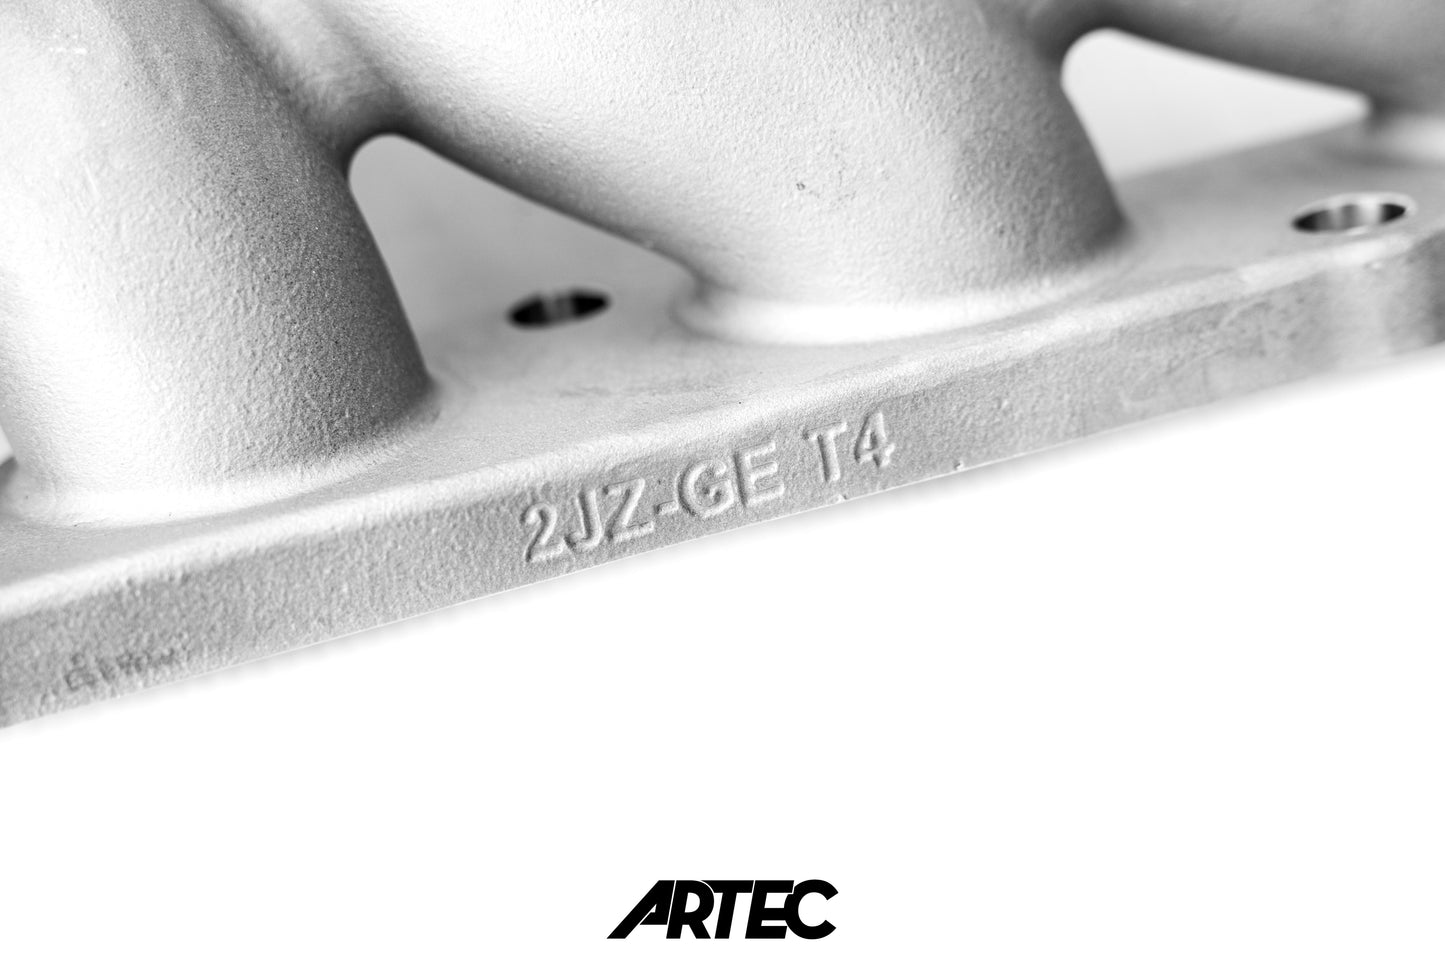 ARTEC - 2JZ GE T4 Exhaust Manifold